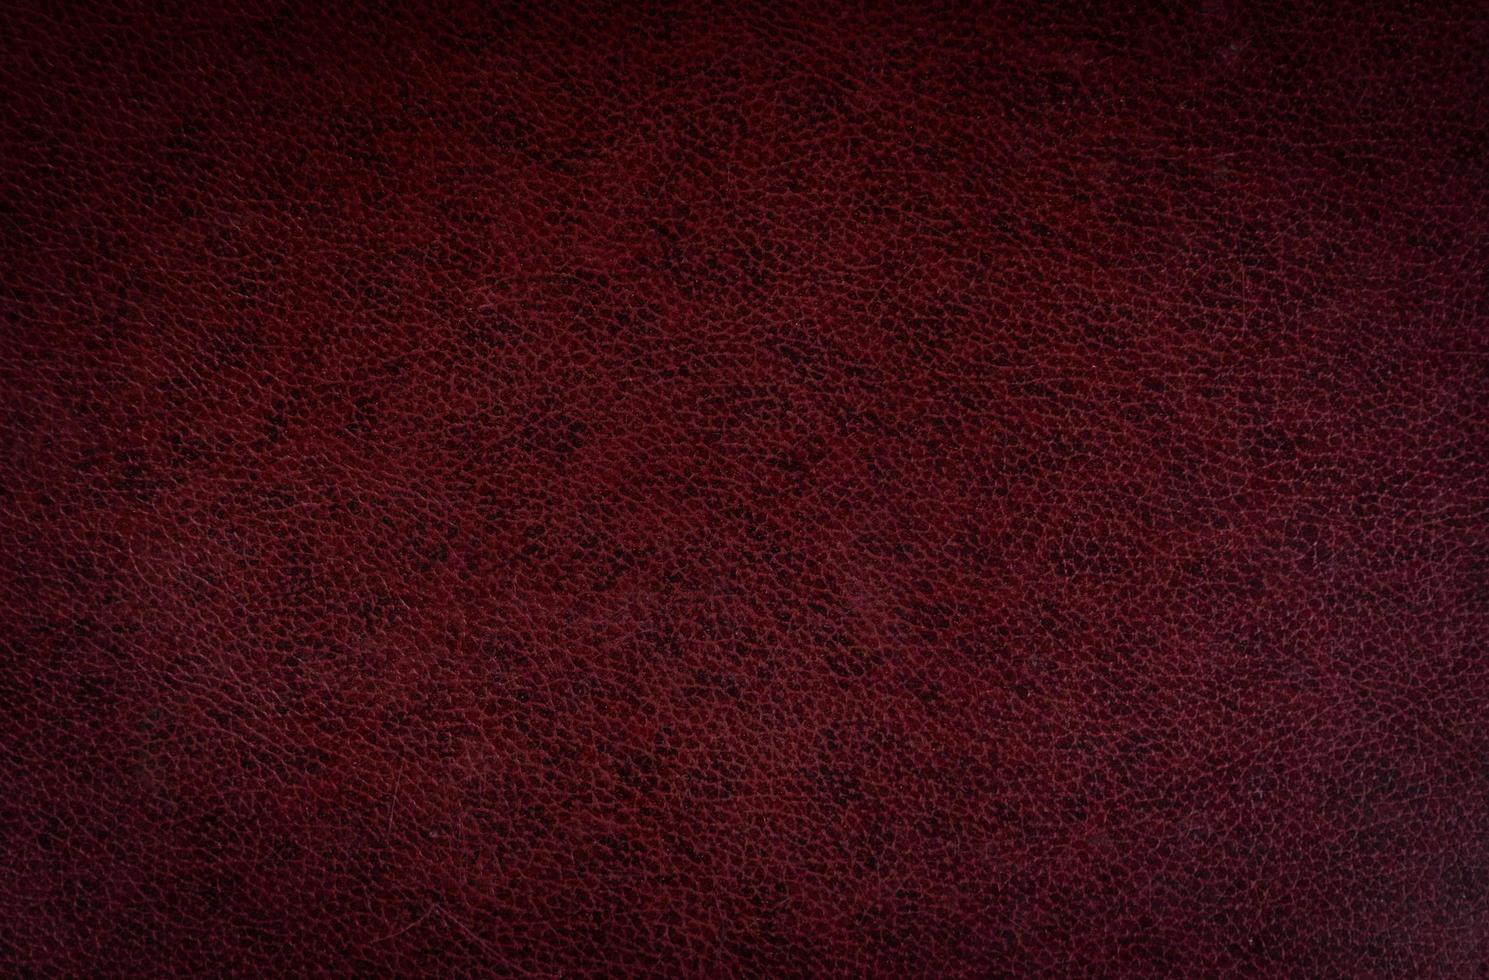 Dark red leather book cover design photo